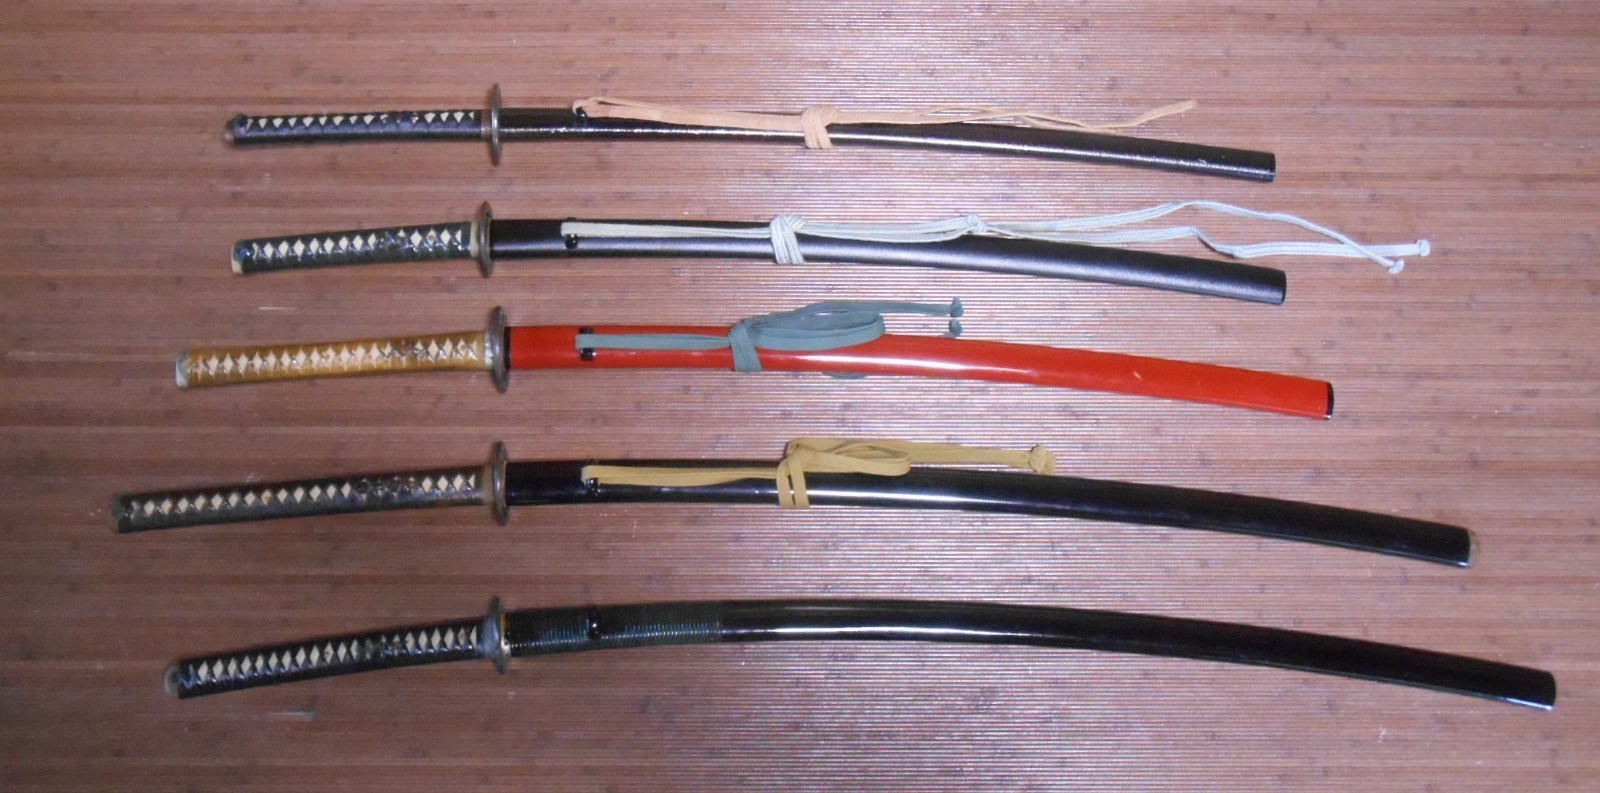 刀柄に漆塗り 国際水月塾武術協会 International Suigetsujuku Bujutsu Association